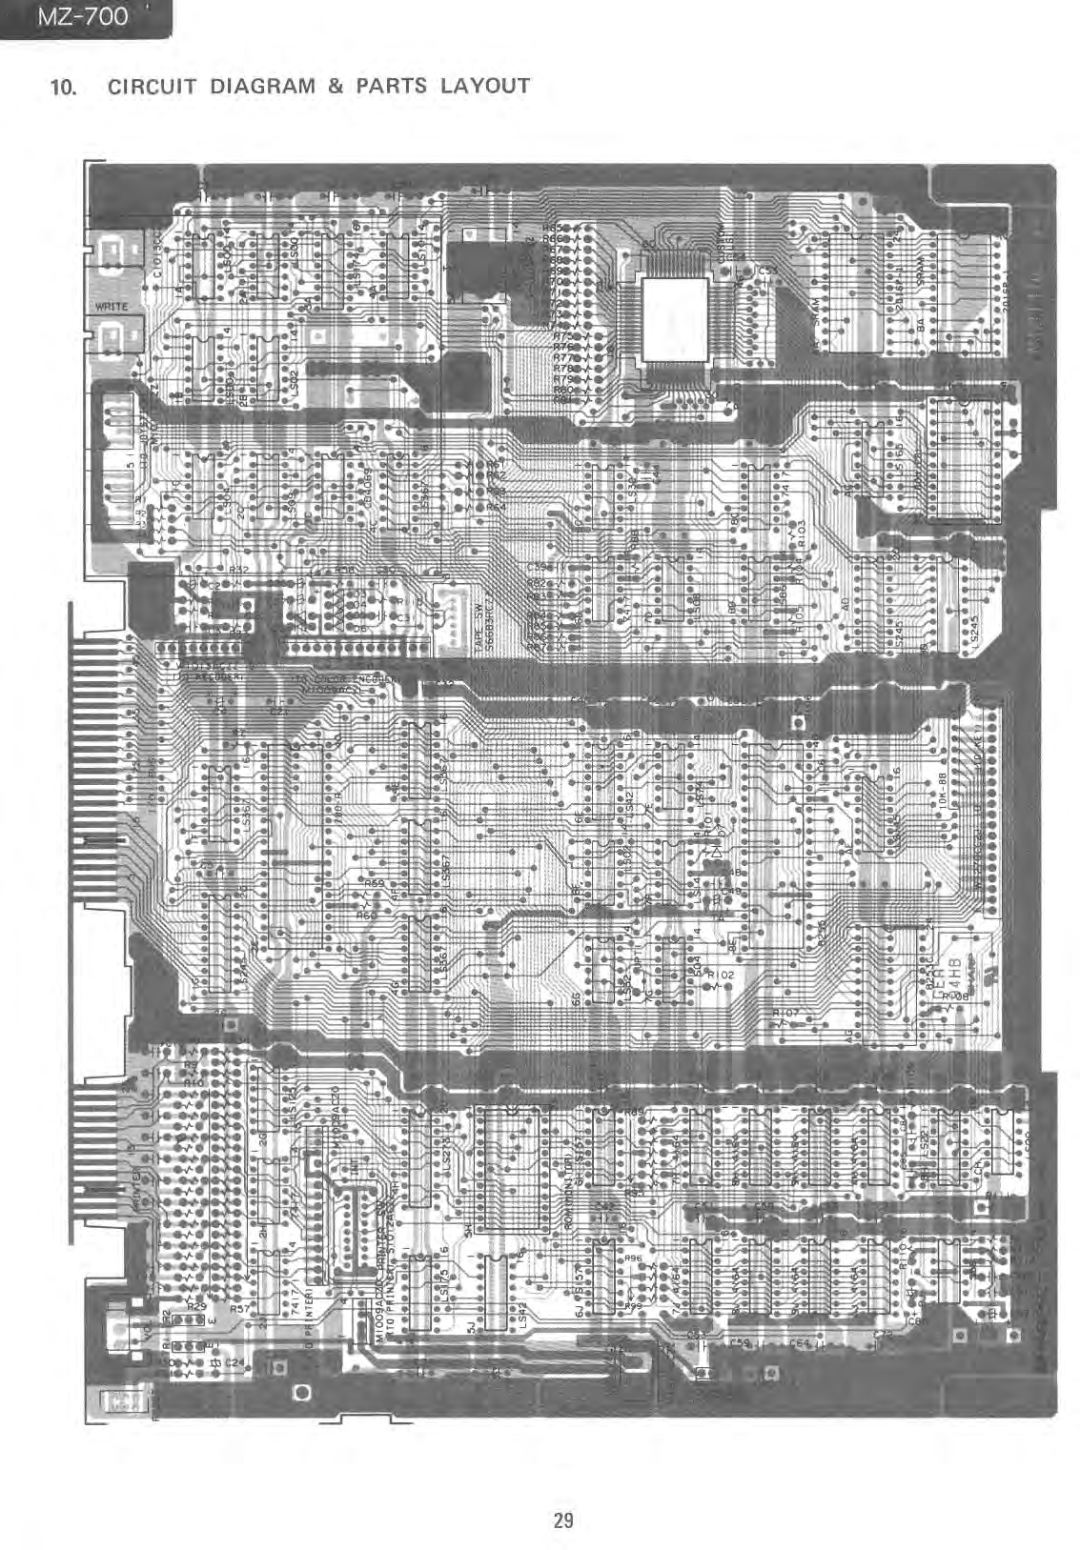 Sharp MZ-700 manual Circuit Diagram & Parts Layout 